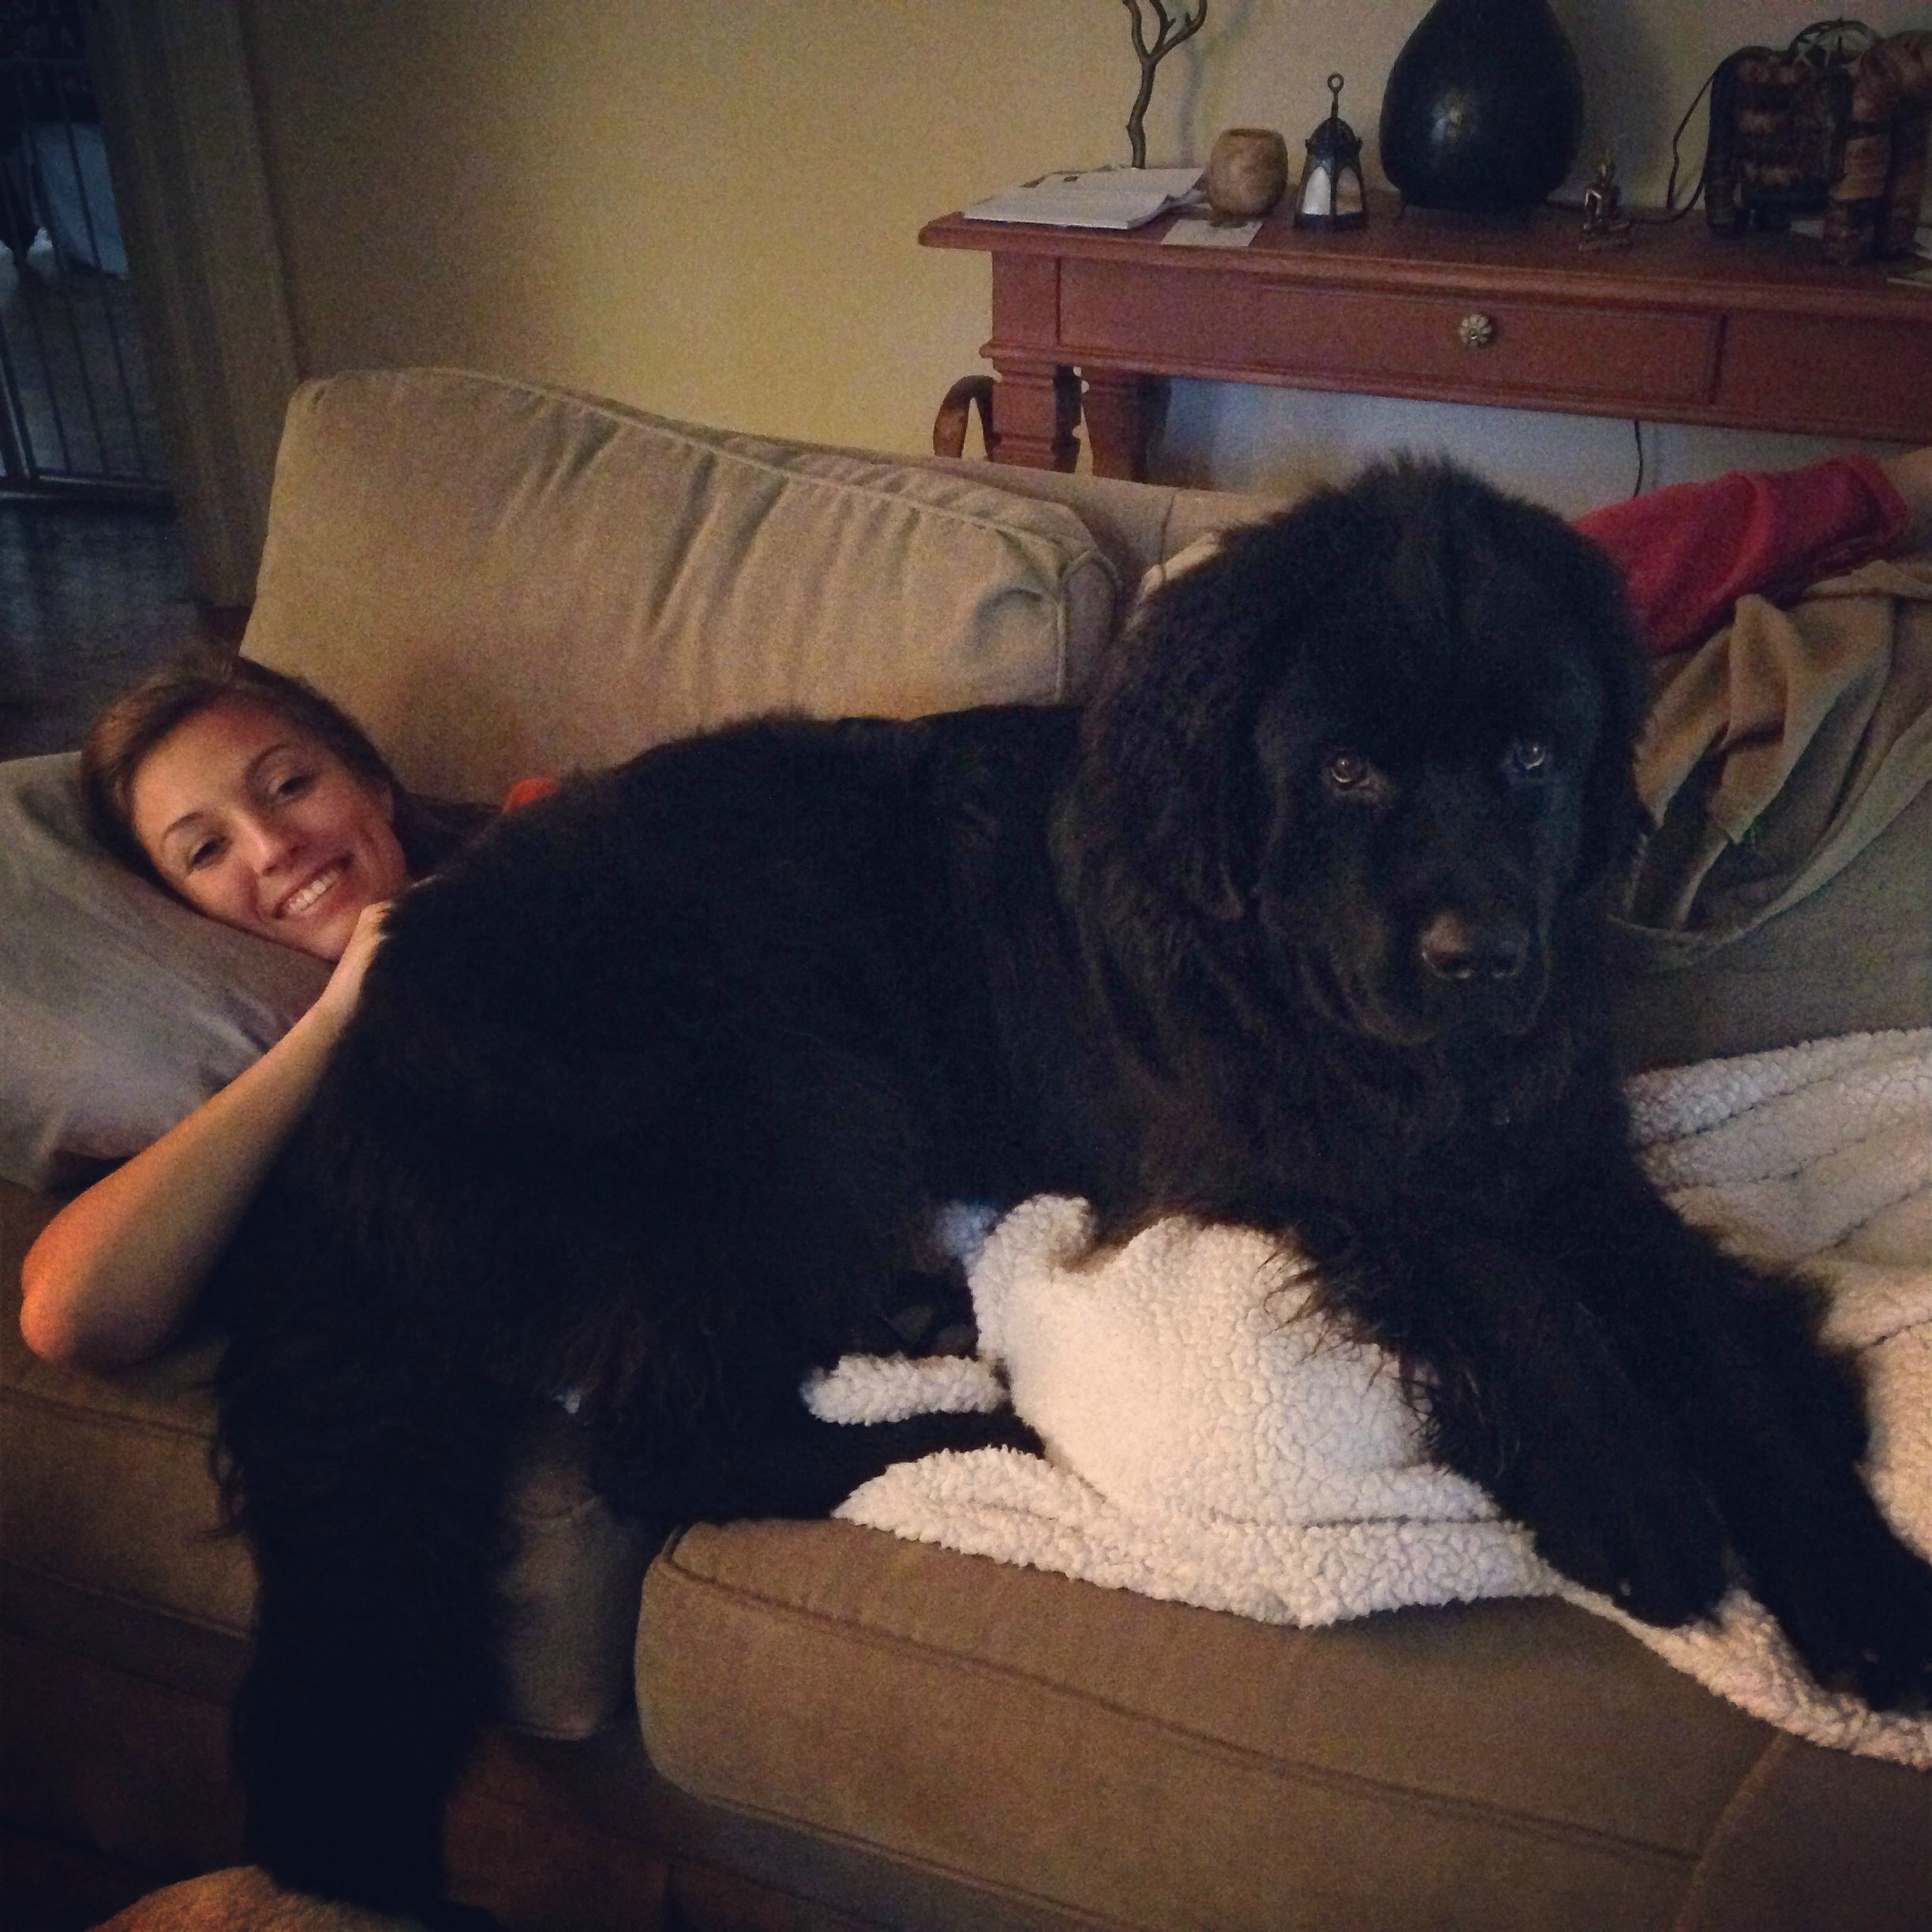 big lap dog breeds